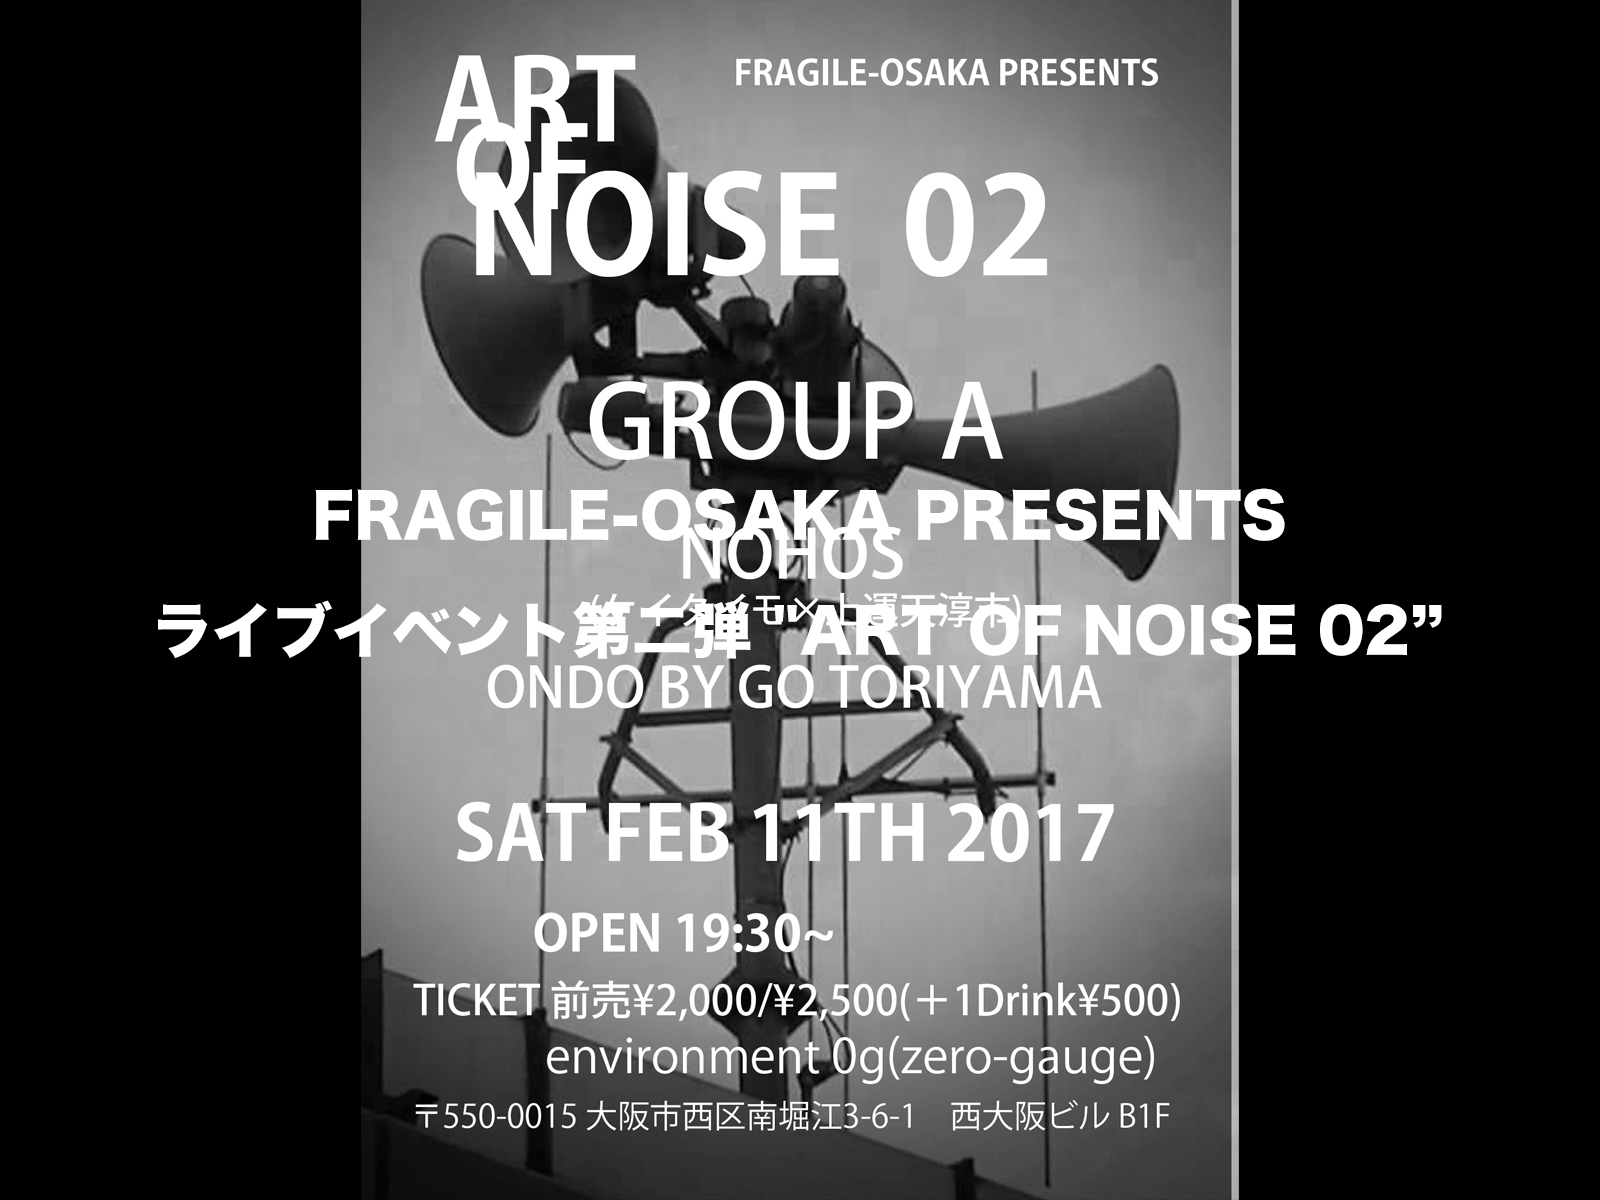 FRAGILE-OSAKA PRESENTS ライブイベント第二弾 “ART OF NOISE 02”